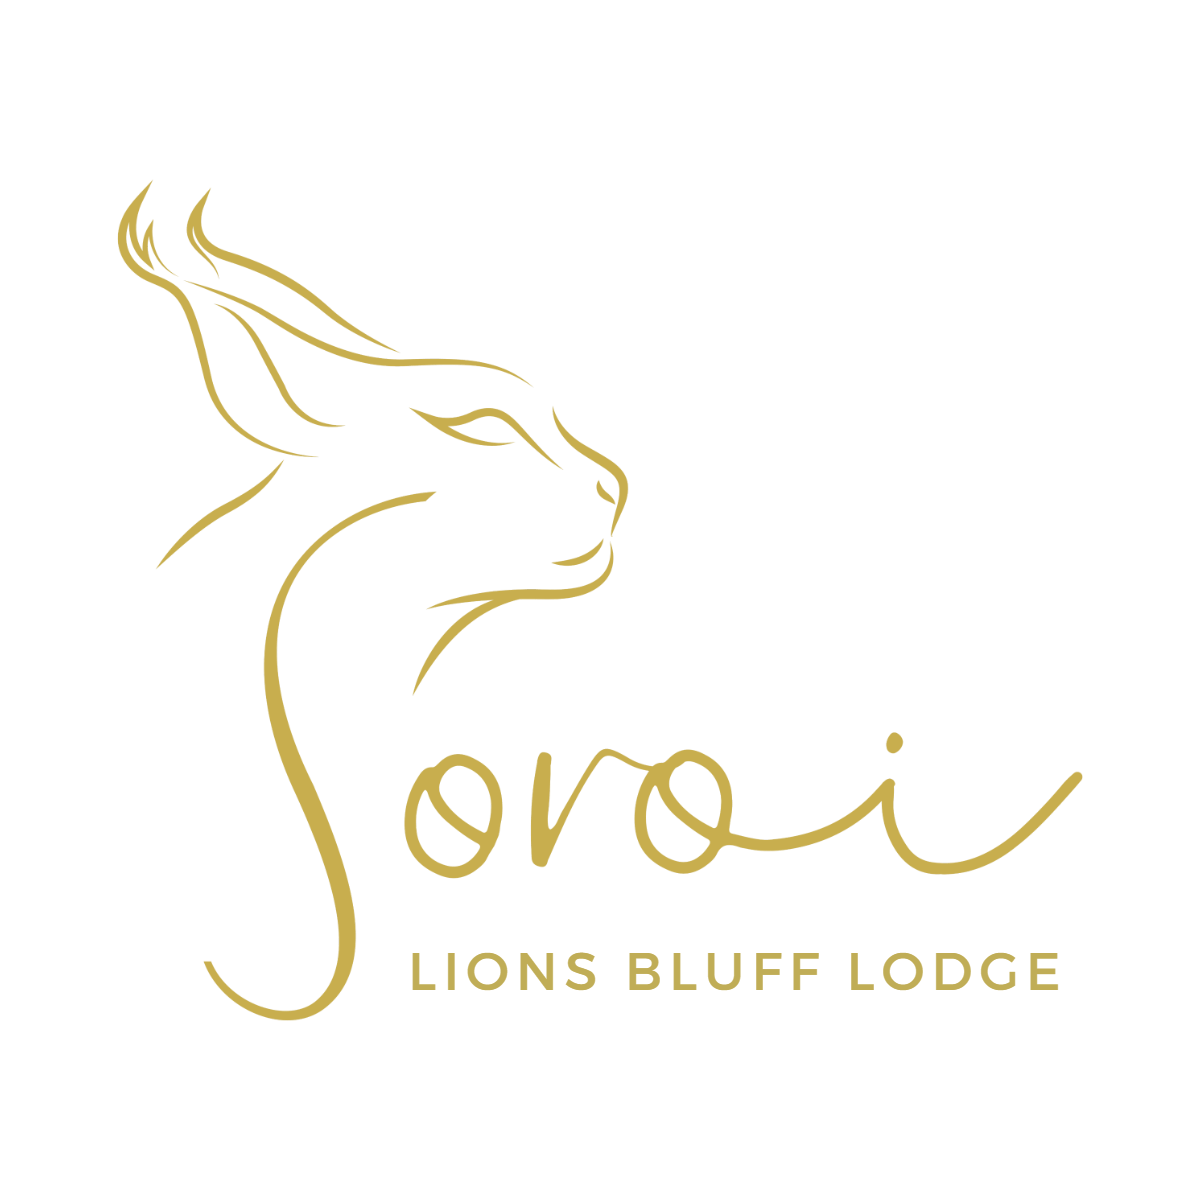 Soroi Lions Bluff Lodge